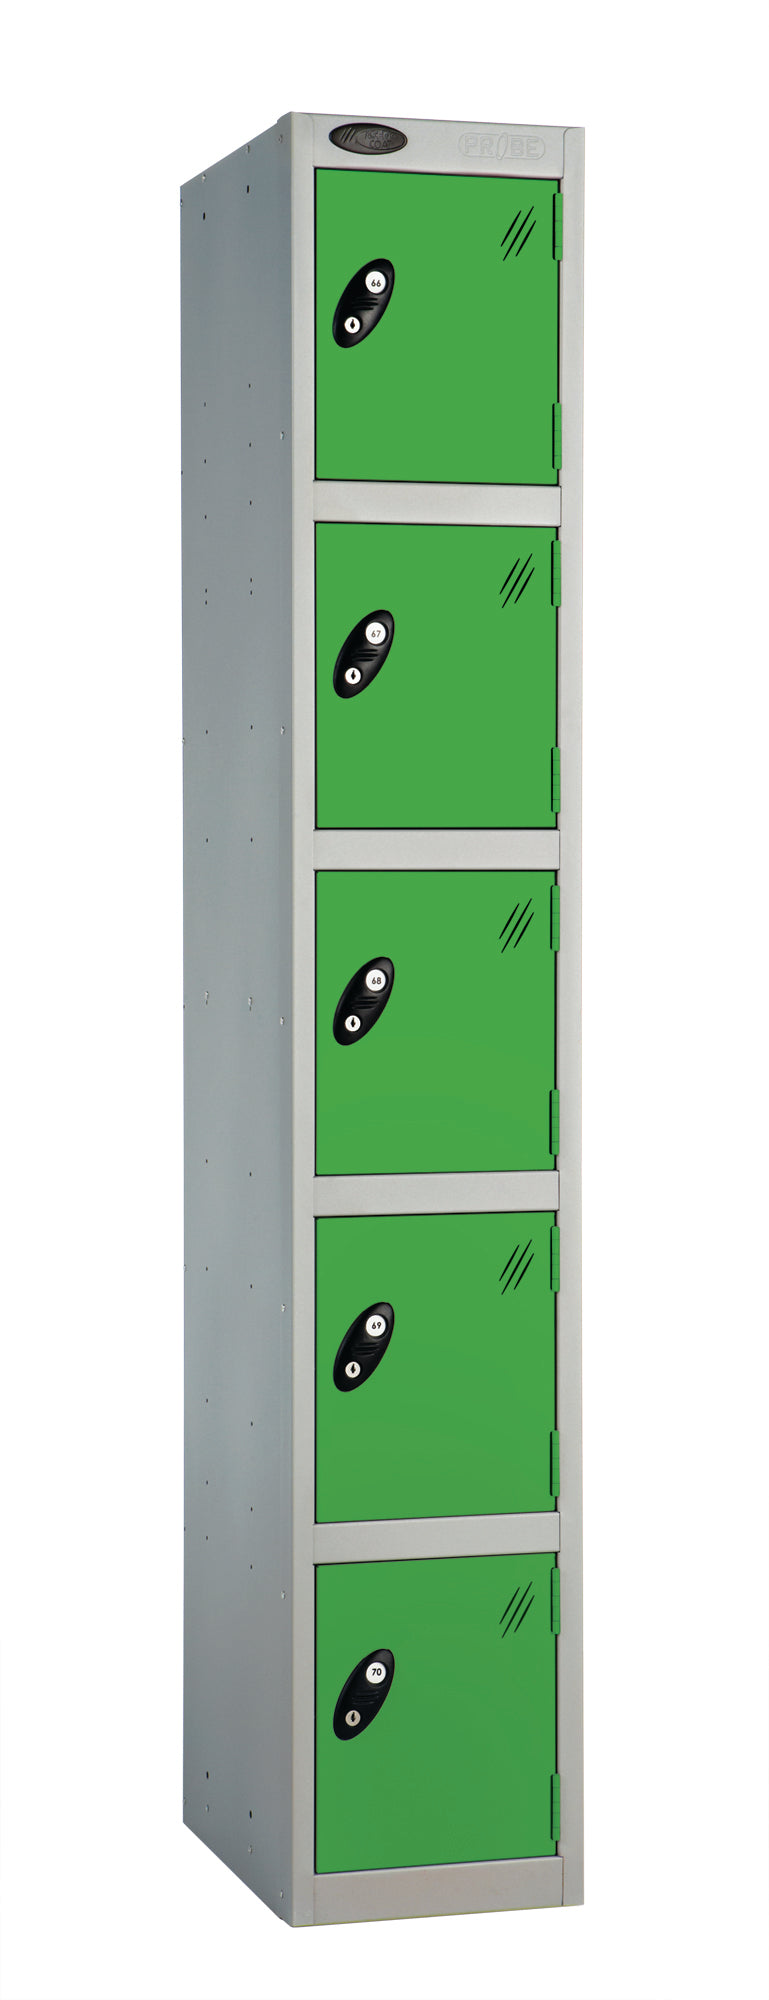 PROBEBOX STANDARD 1 NEST STEEL LOCKERS - FOREST GREEN 5 DOOR Storage Lockers > Lockers > Cabinets > Storage > Probe > One Stop For Safety   